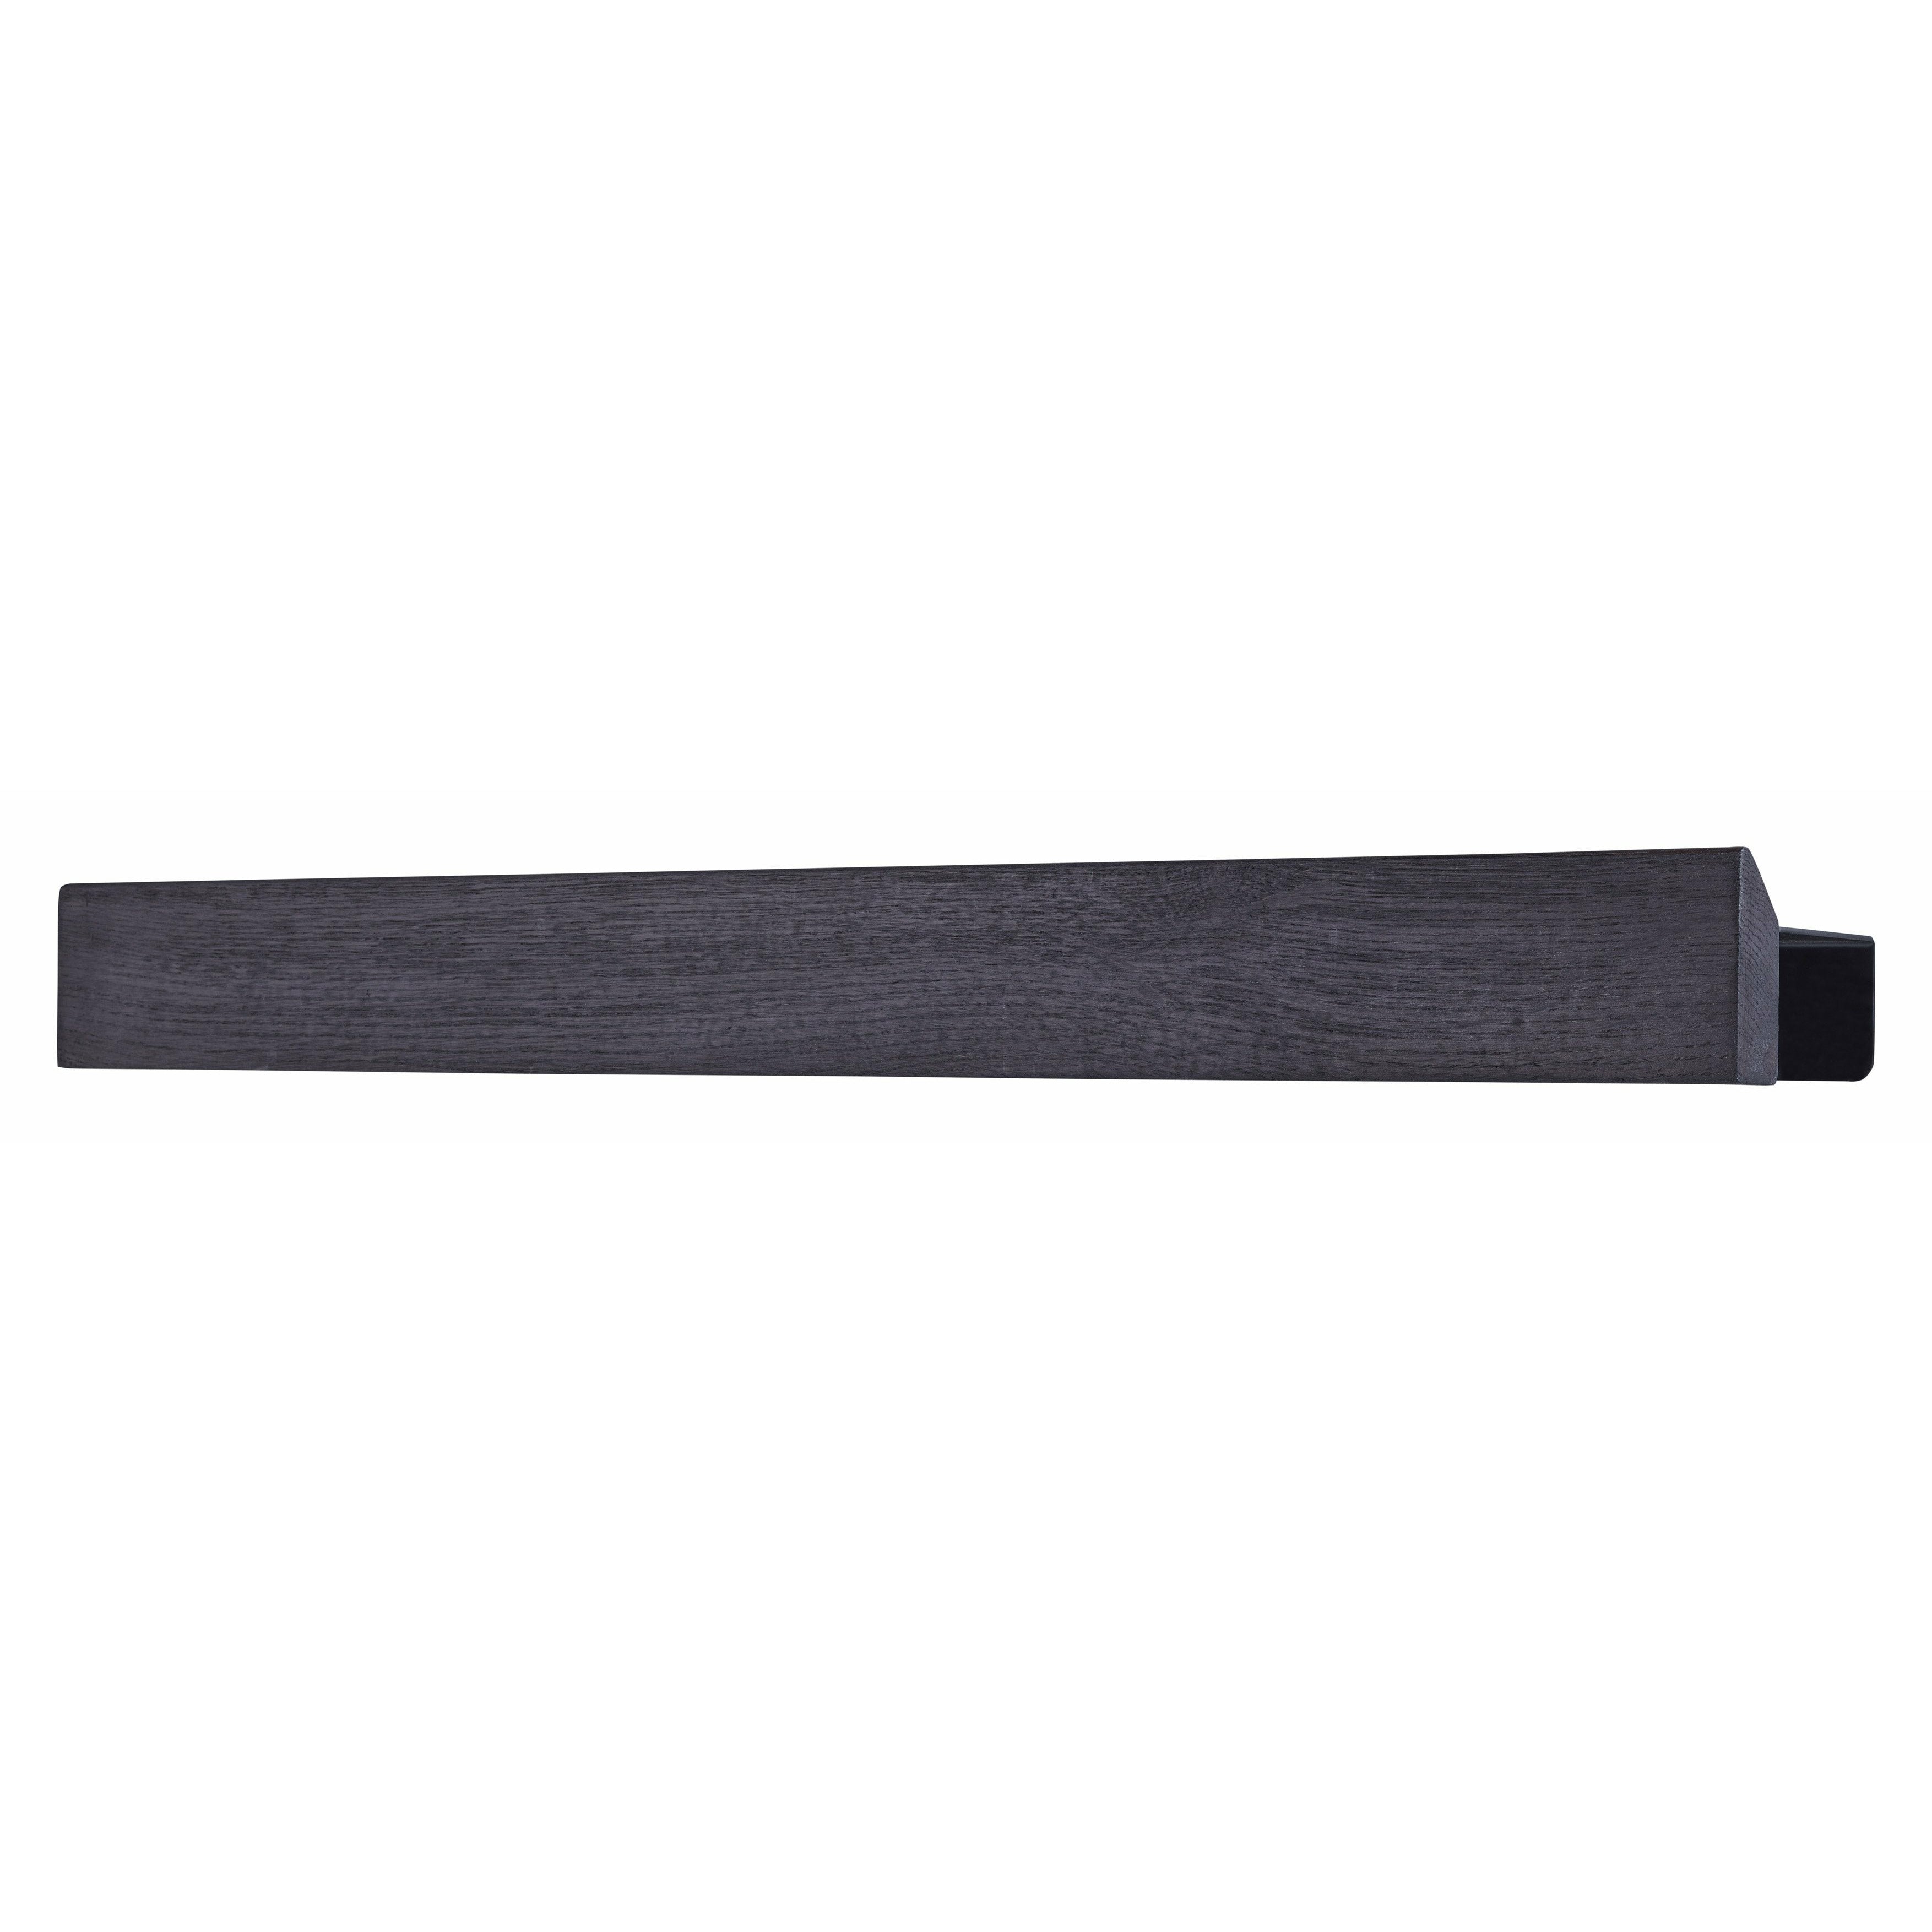 Gejst Flex rail 60 chêne noir / noir, 6cm